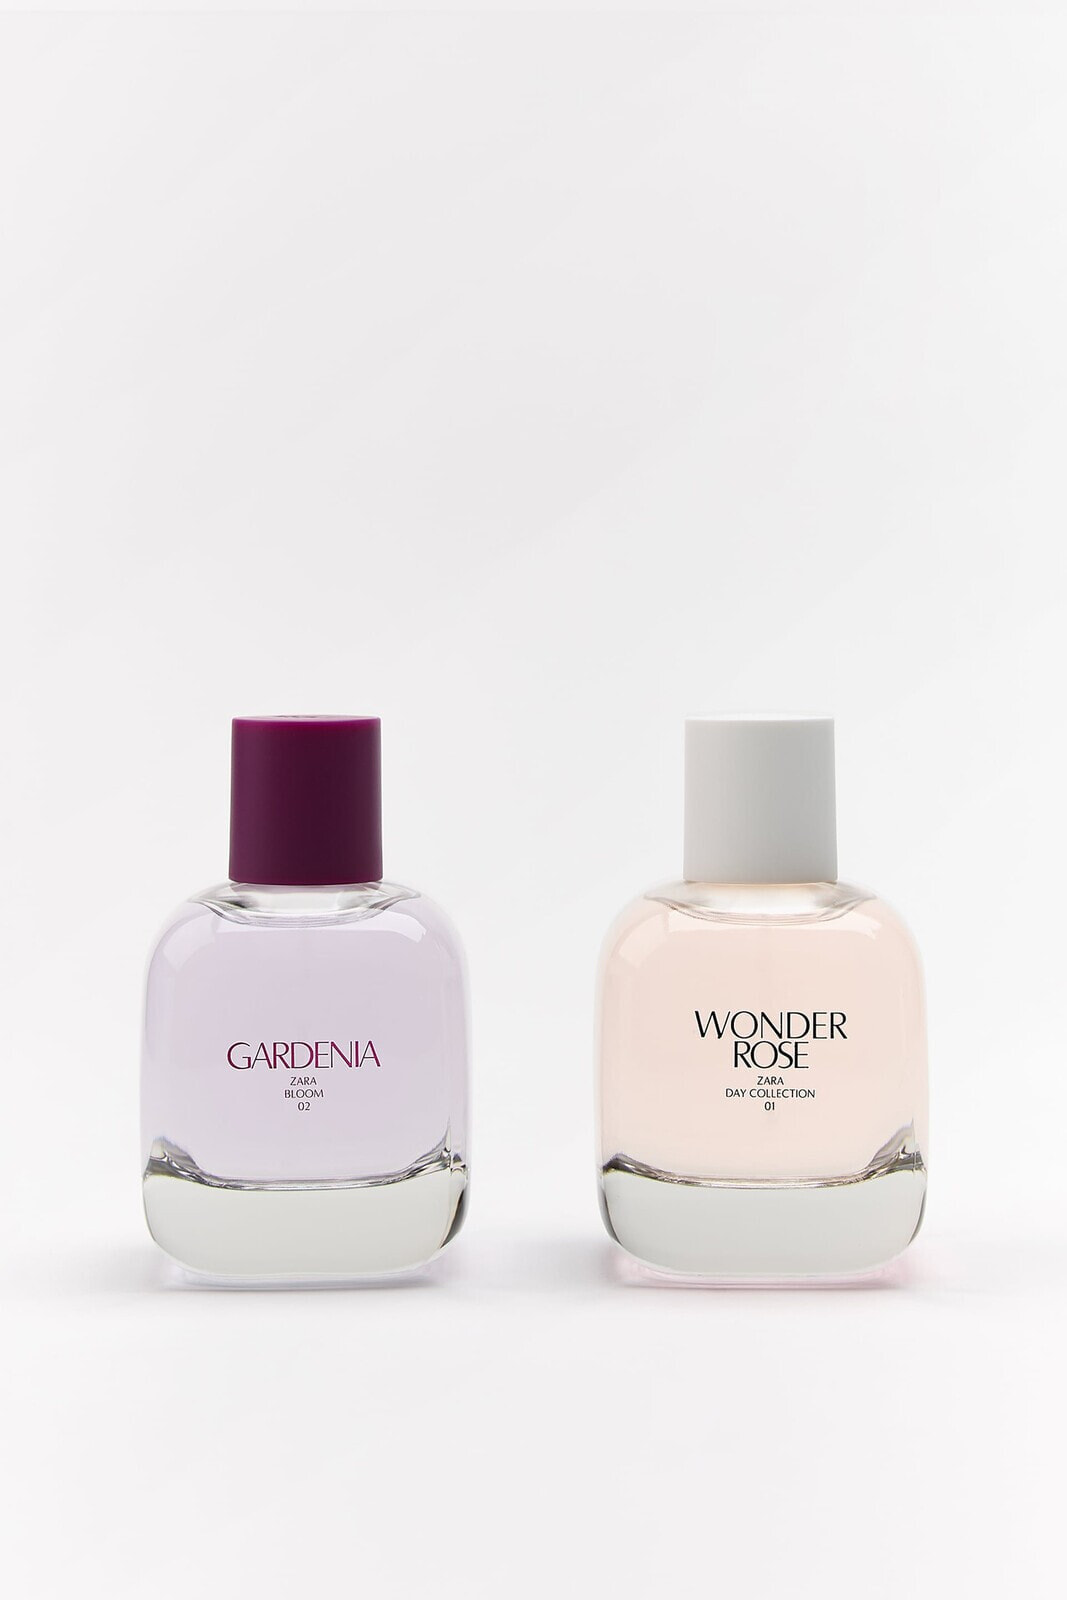 Gardenia + wonder rose 90 ml / 3.04 oz + 90 ml / 3.04 oz